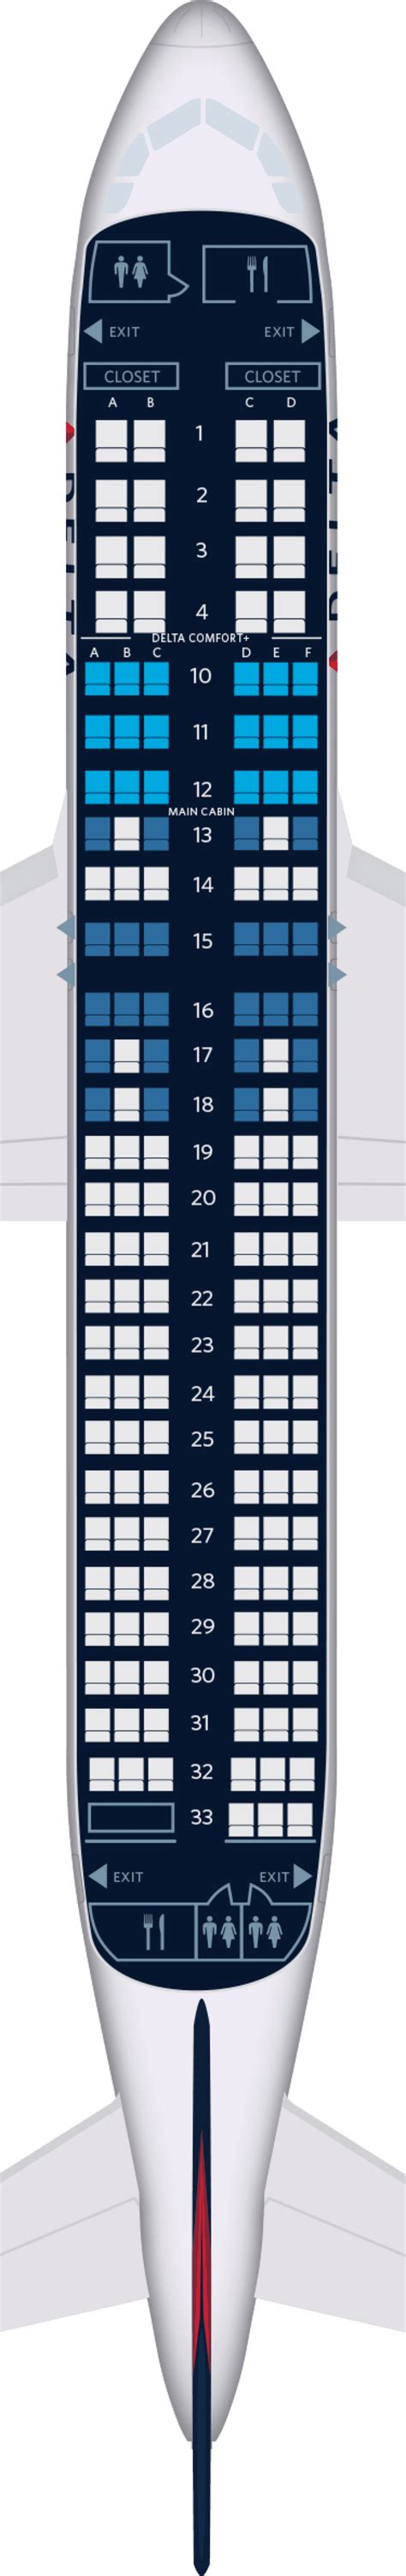 A320 Aircraft Seating Chart